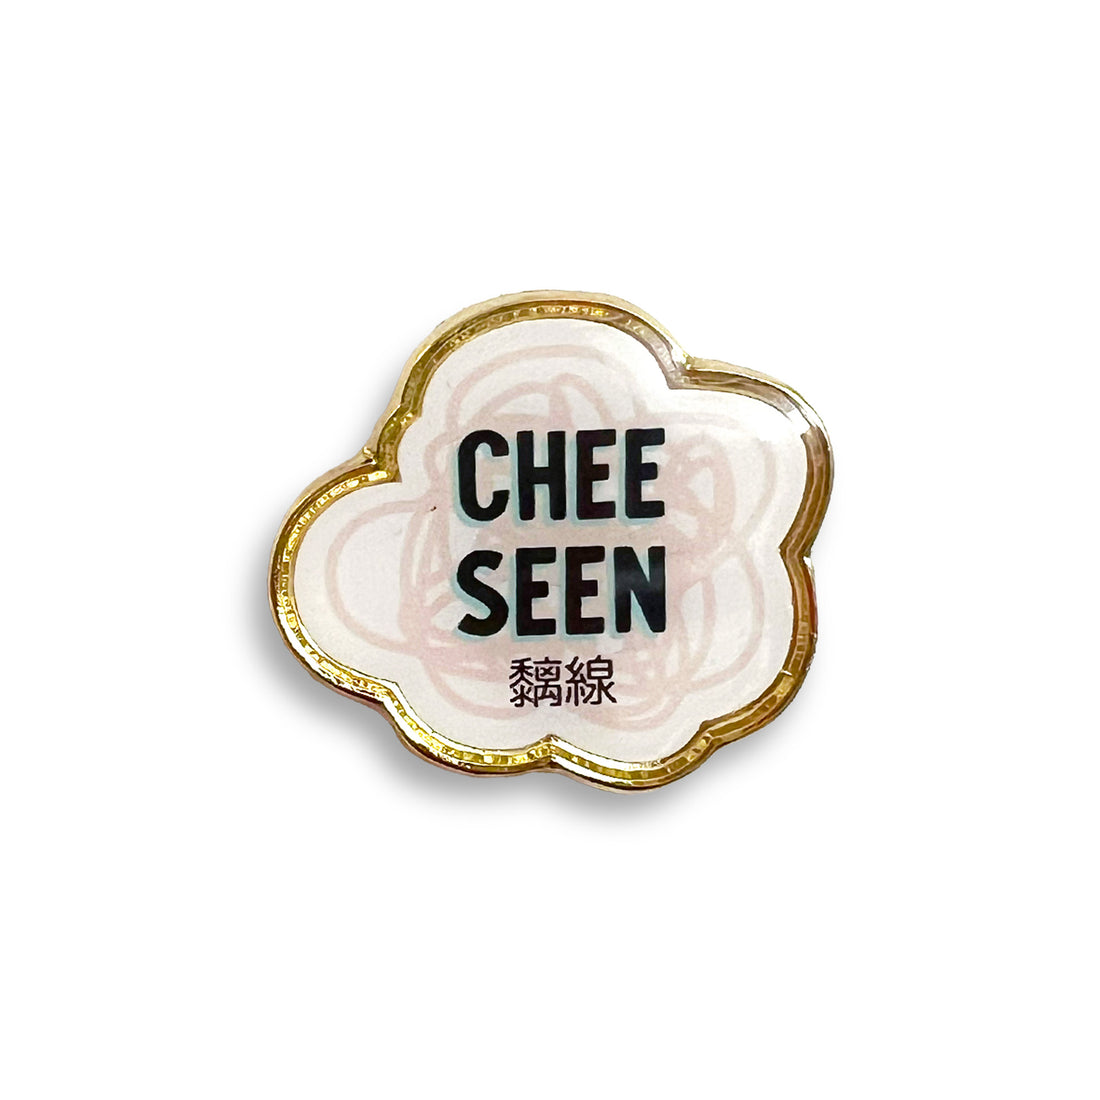 Chee seen 黐線 lapel pin by I&